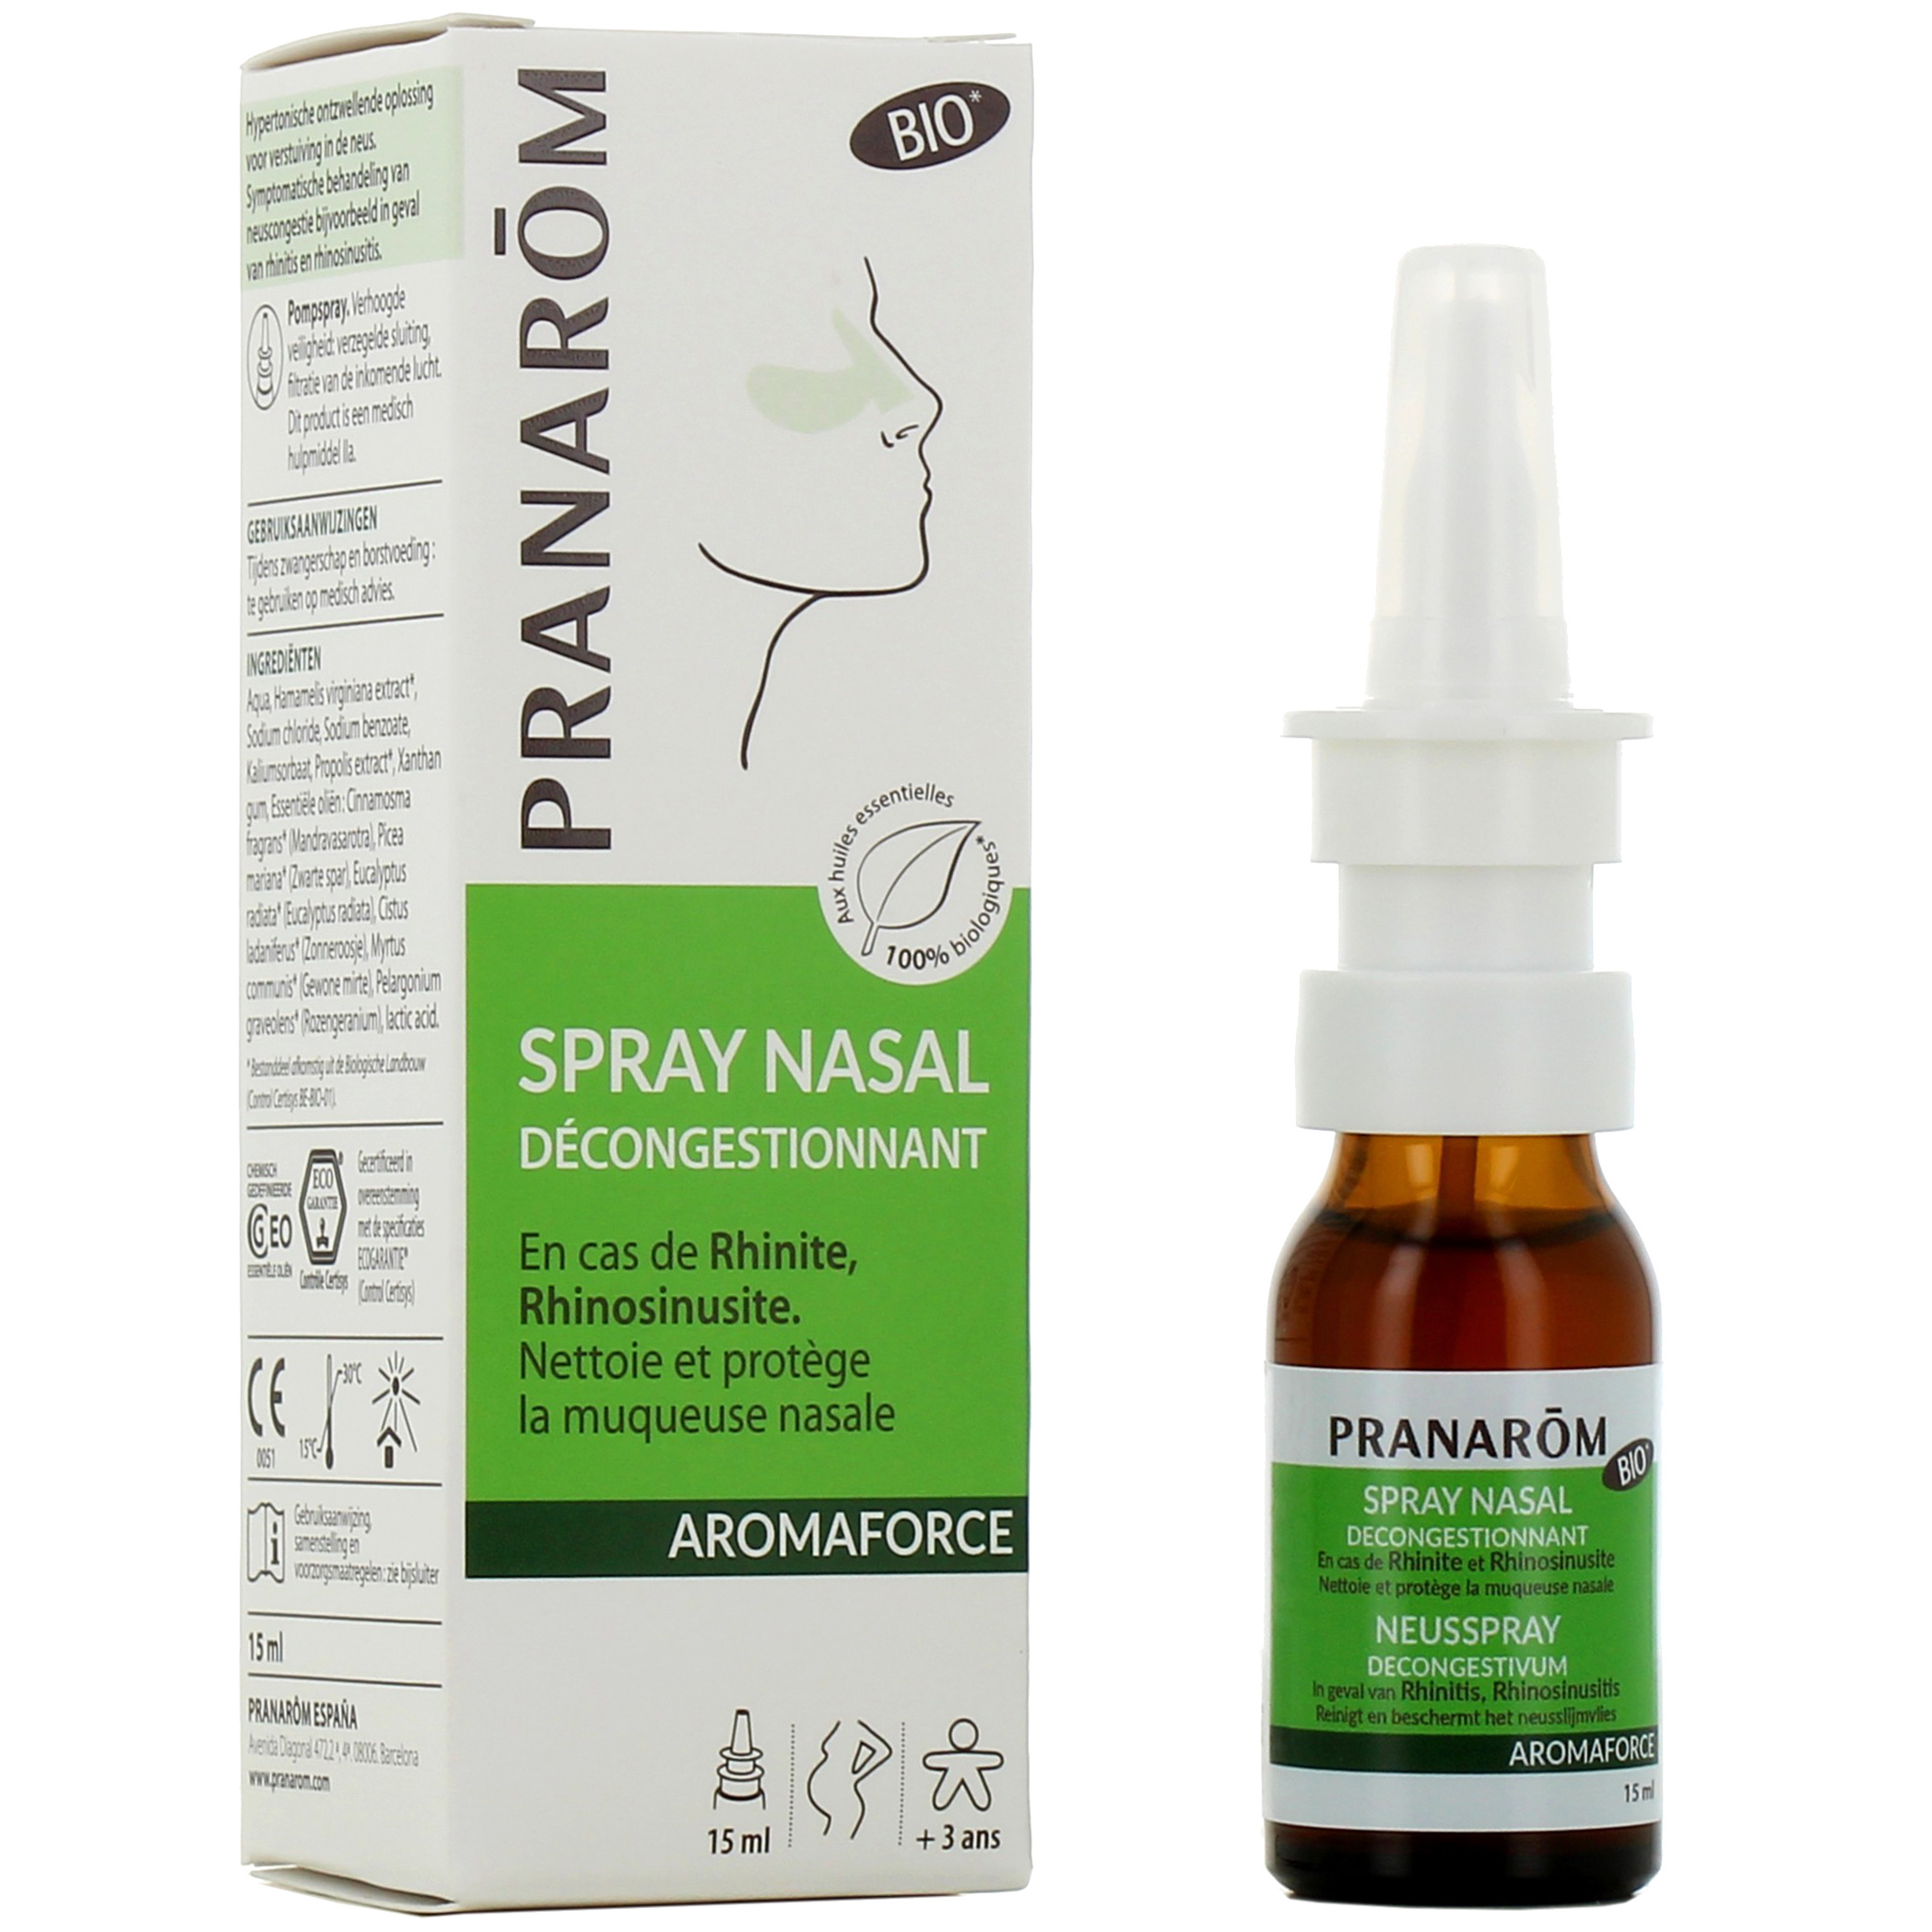 Spray nasal Bio Aromaforce Pranarom